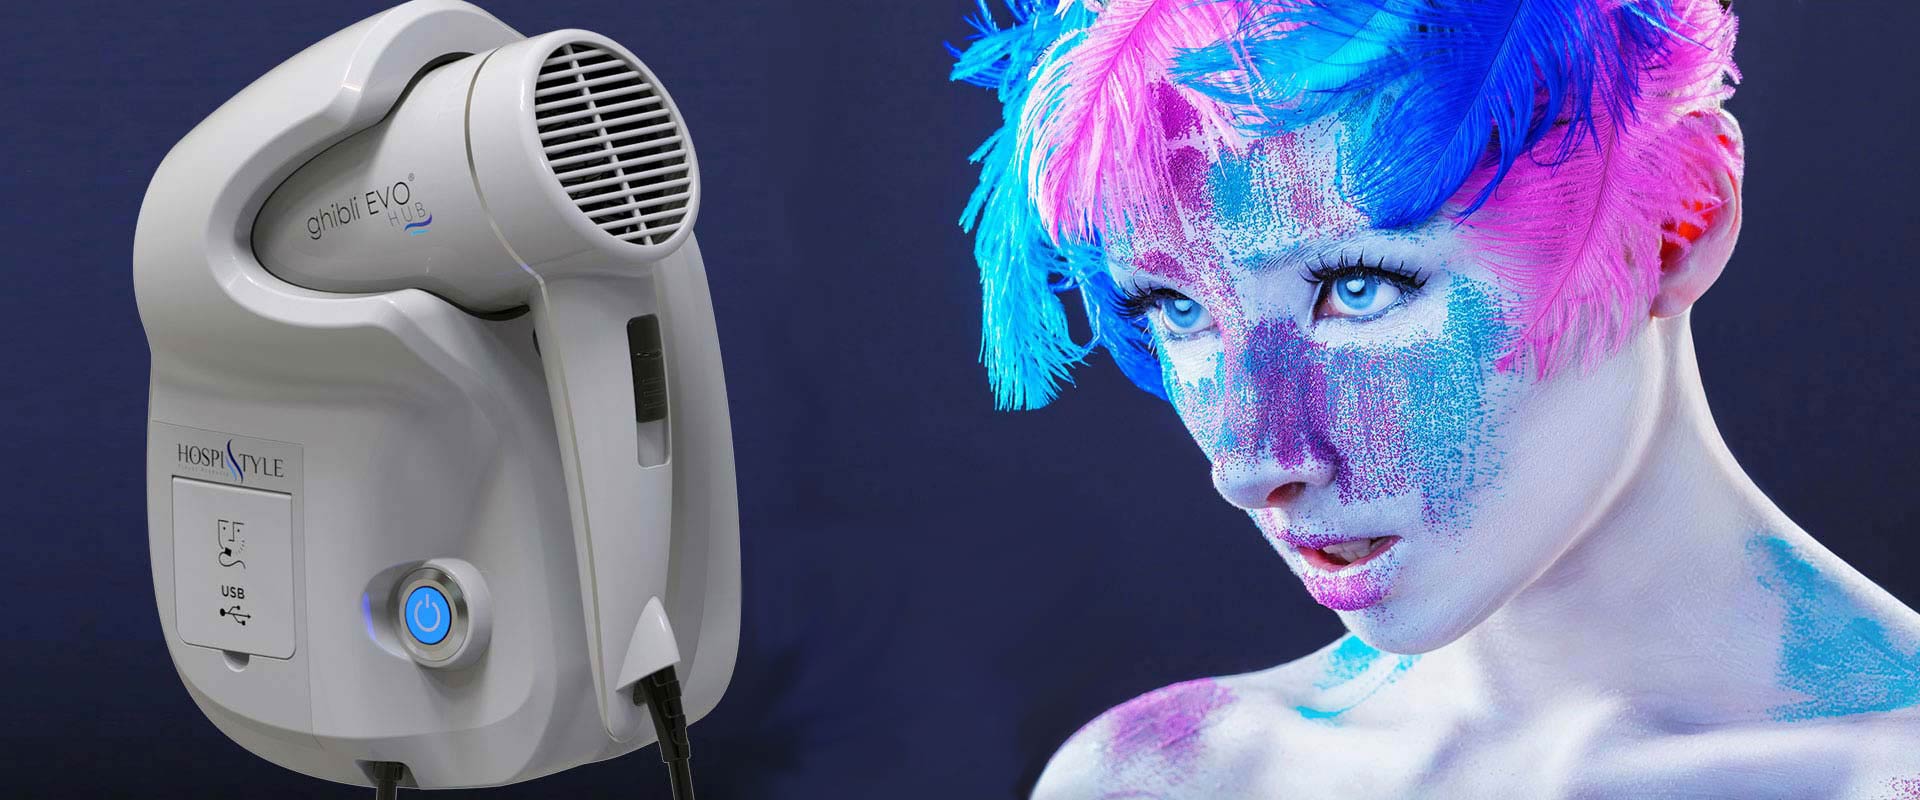 ghibli evo hair dryer for hotel room